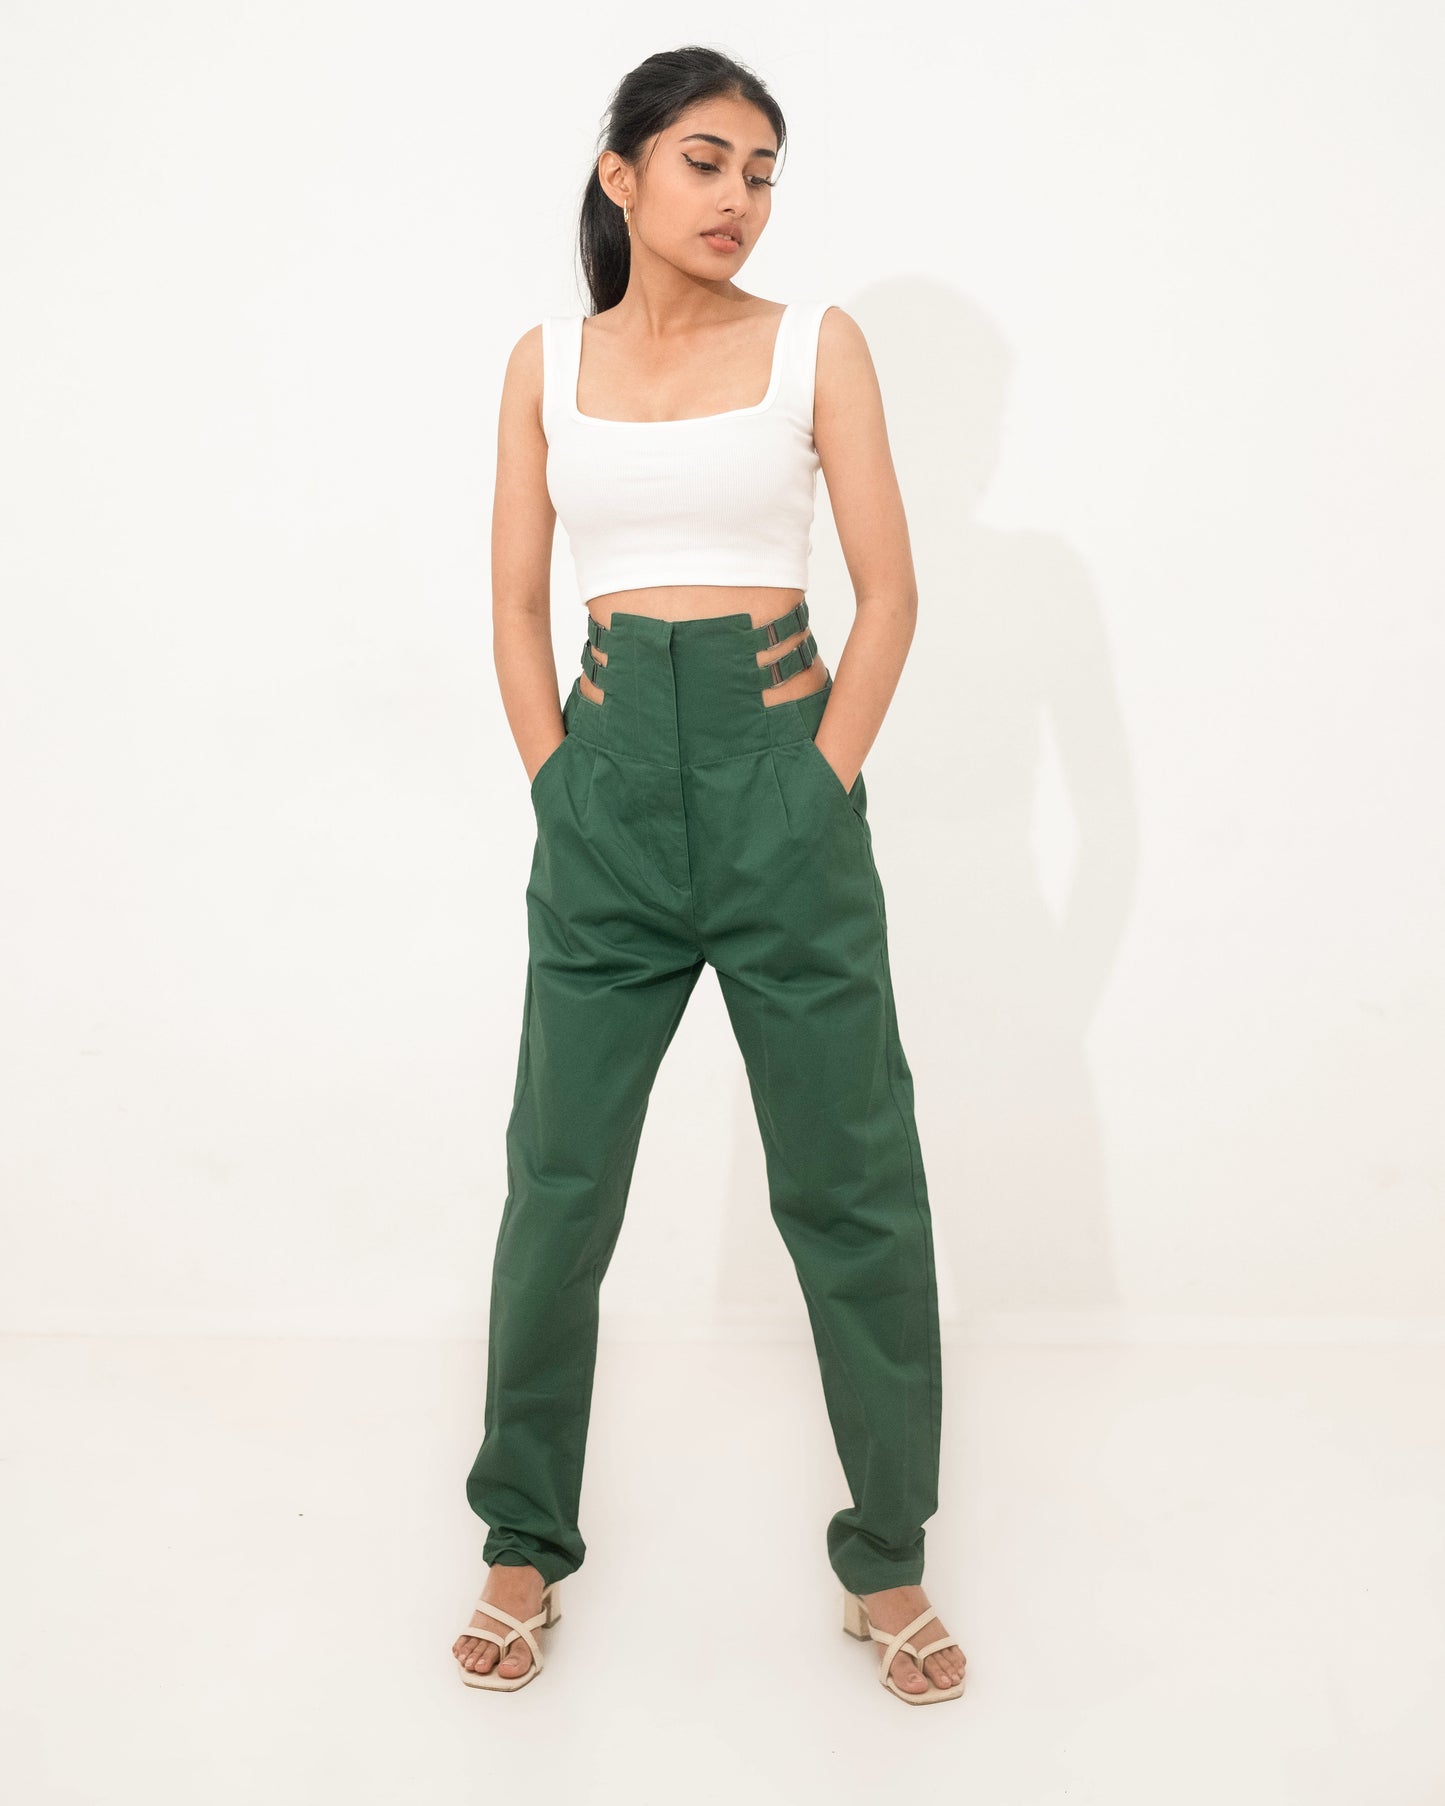 Cleo- Green Pants